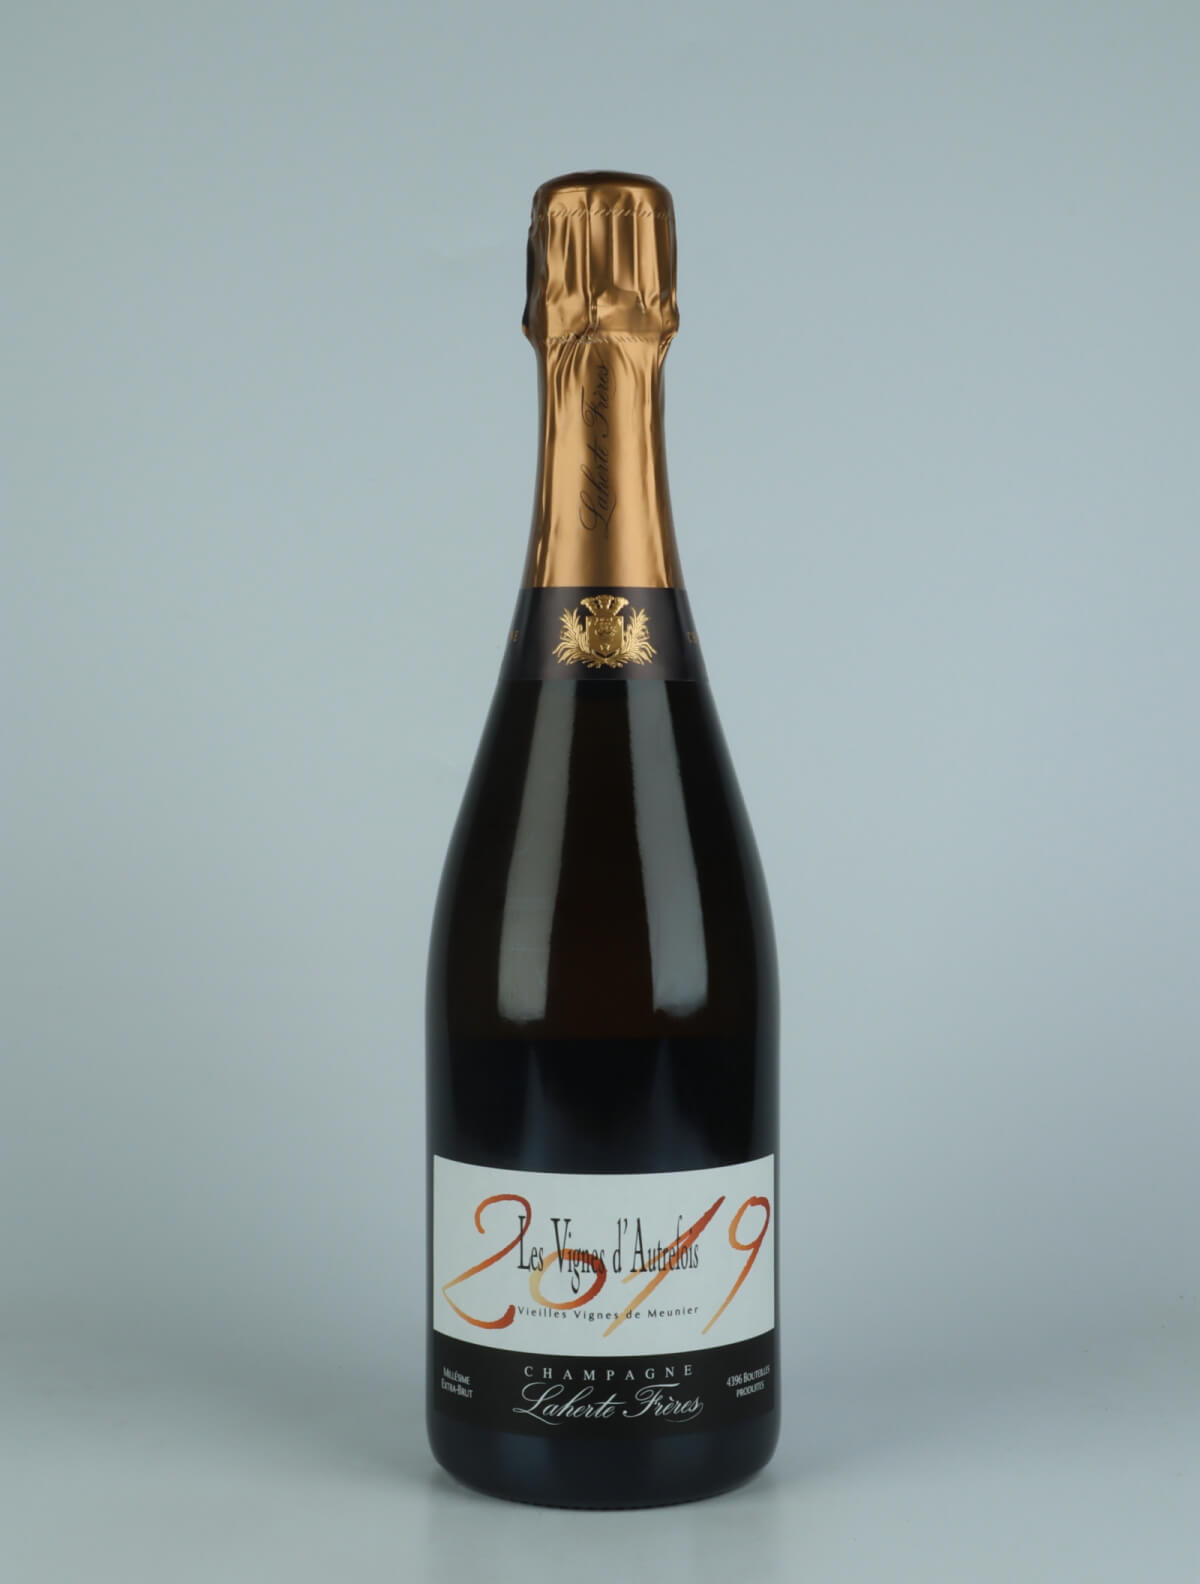 A bottle 2019 Les Vignes d'Autrefois Sparkling from Laherte Frères, Champagne in France